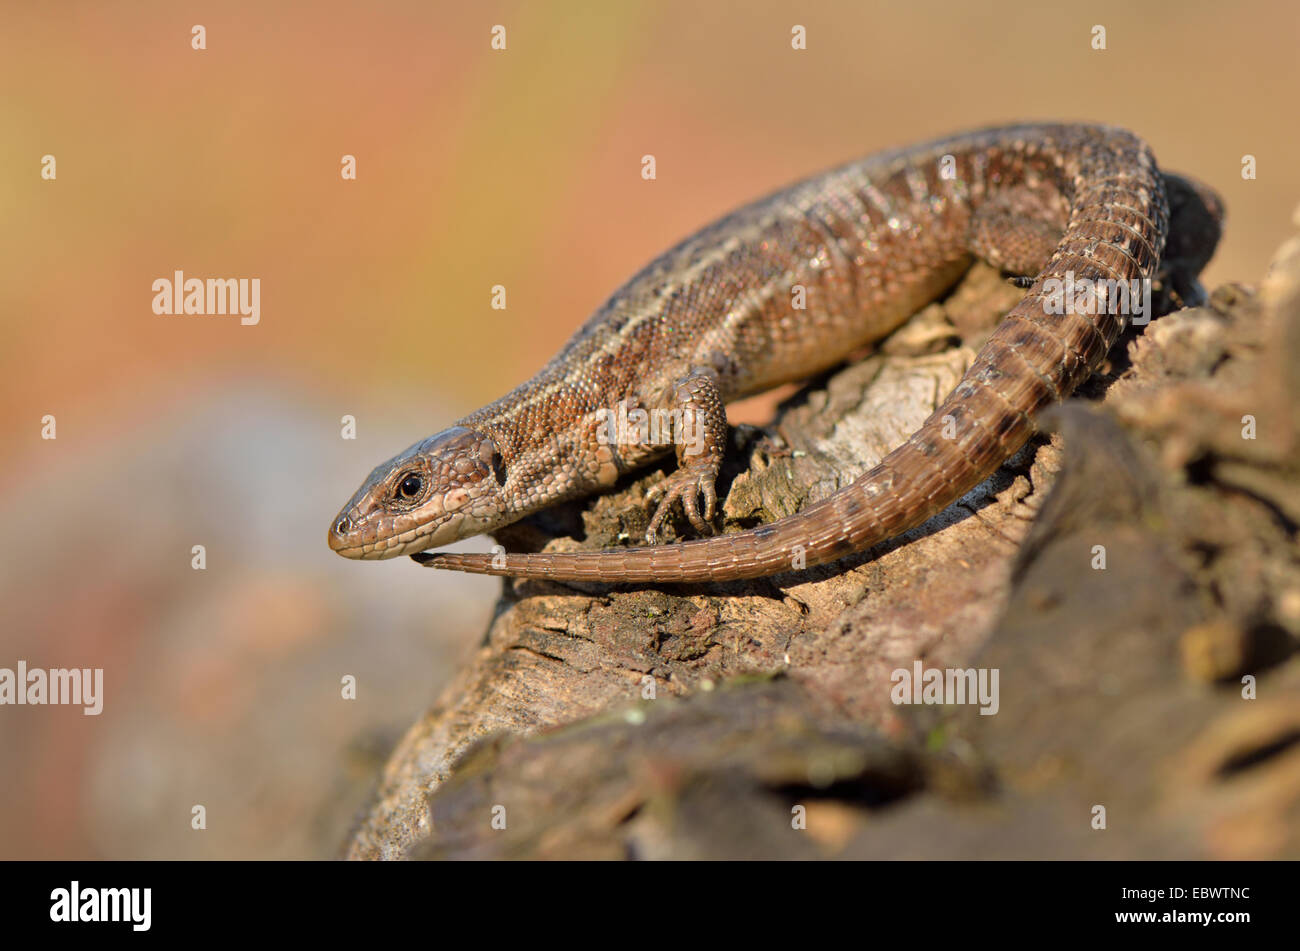 Pregnant Viviparous lizard (Zootoca vivipara), sunbathing on wooden stump, Dortmund, North Rhine-Westphalia, Germany Stock Photo